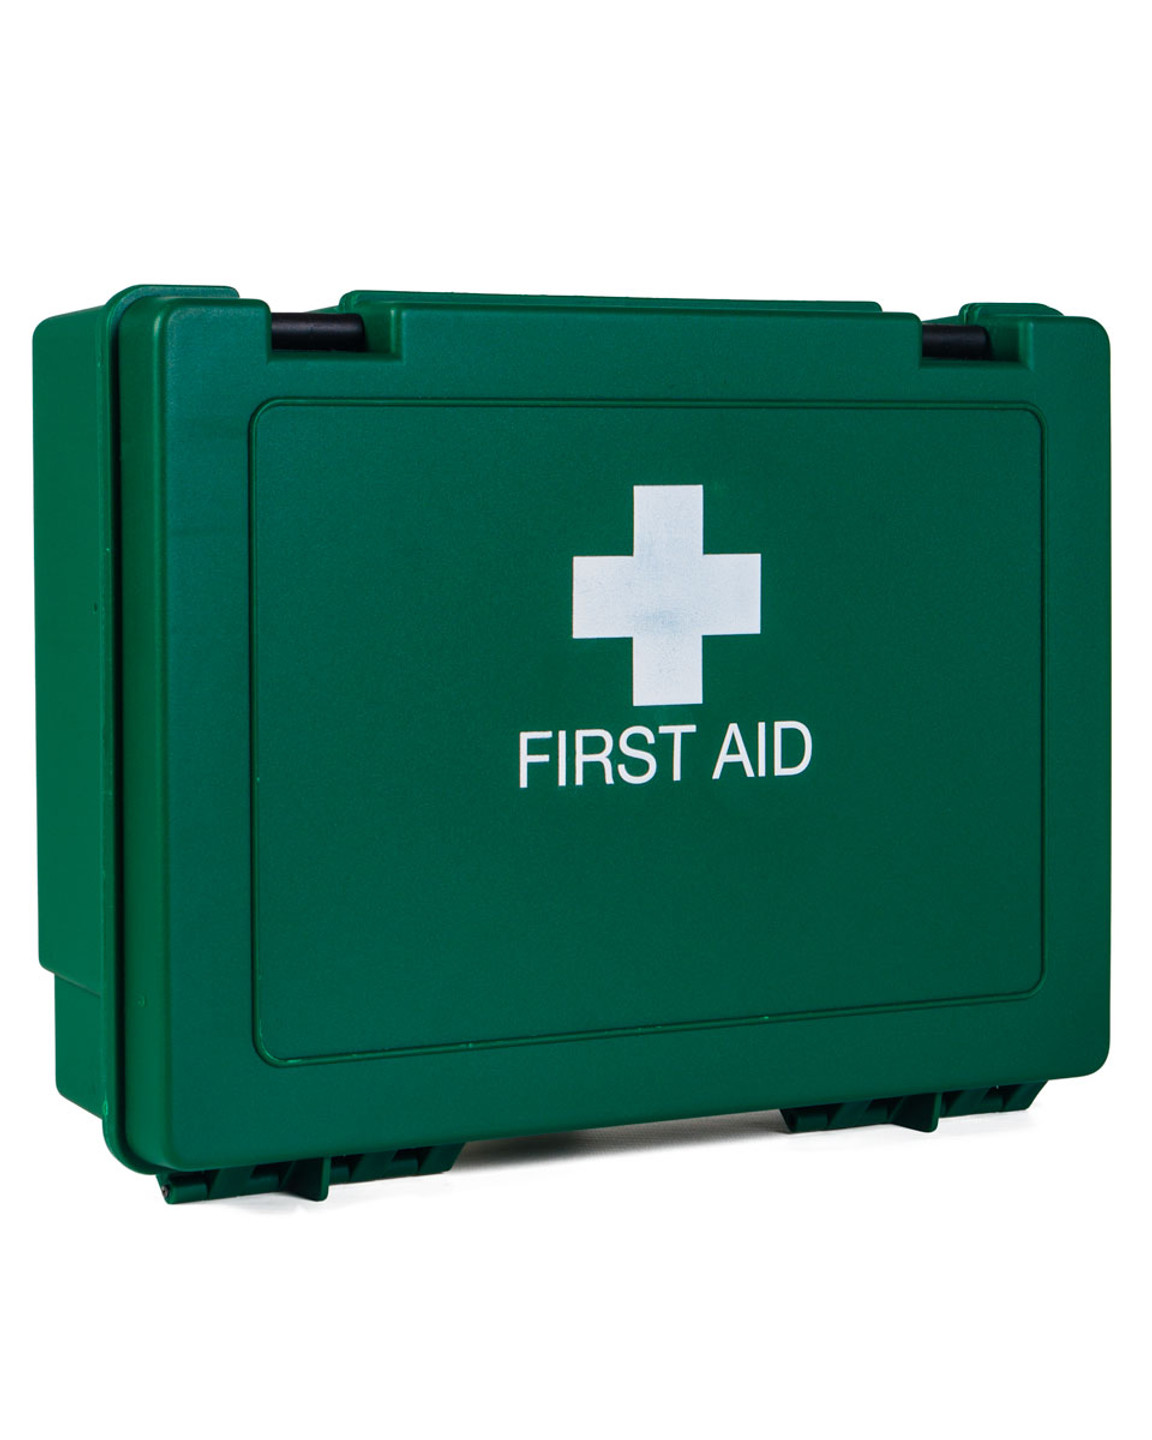 Green First Aid Box 040  Physical Sports First Aid